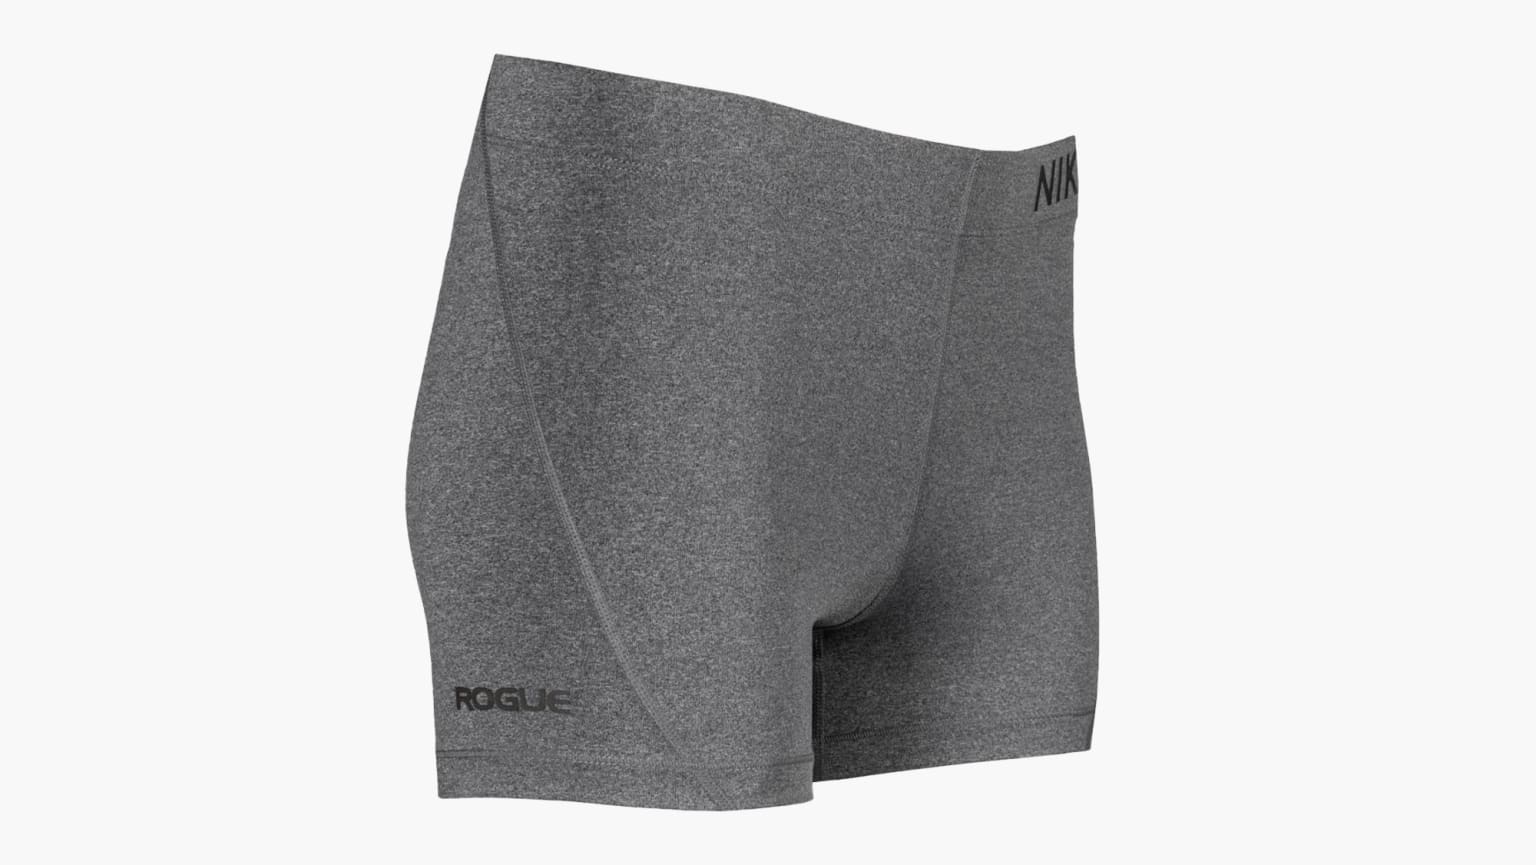 Rogue Nike Women's Pro Compression Shorts